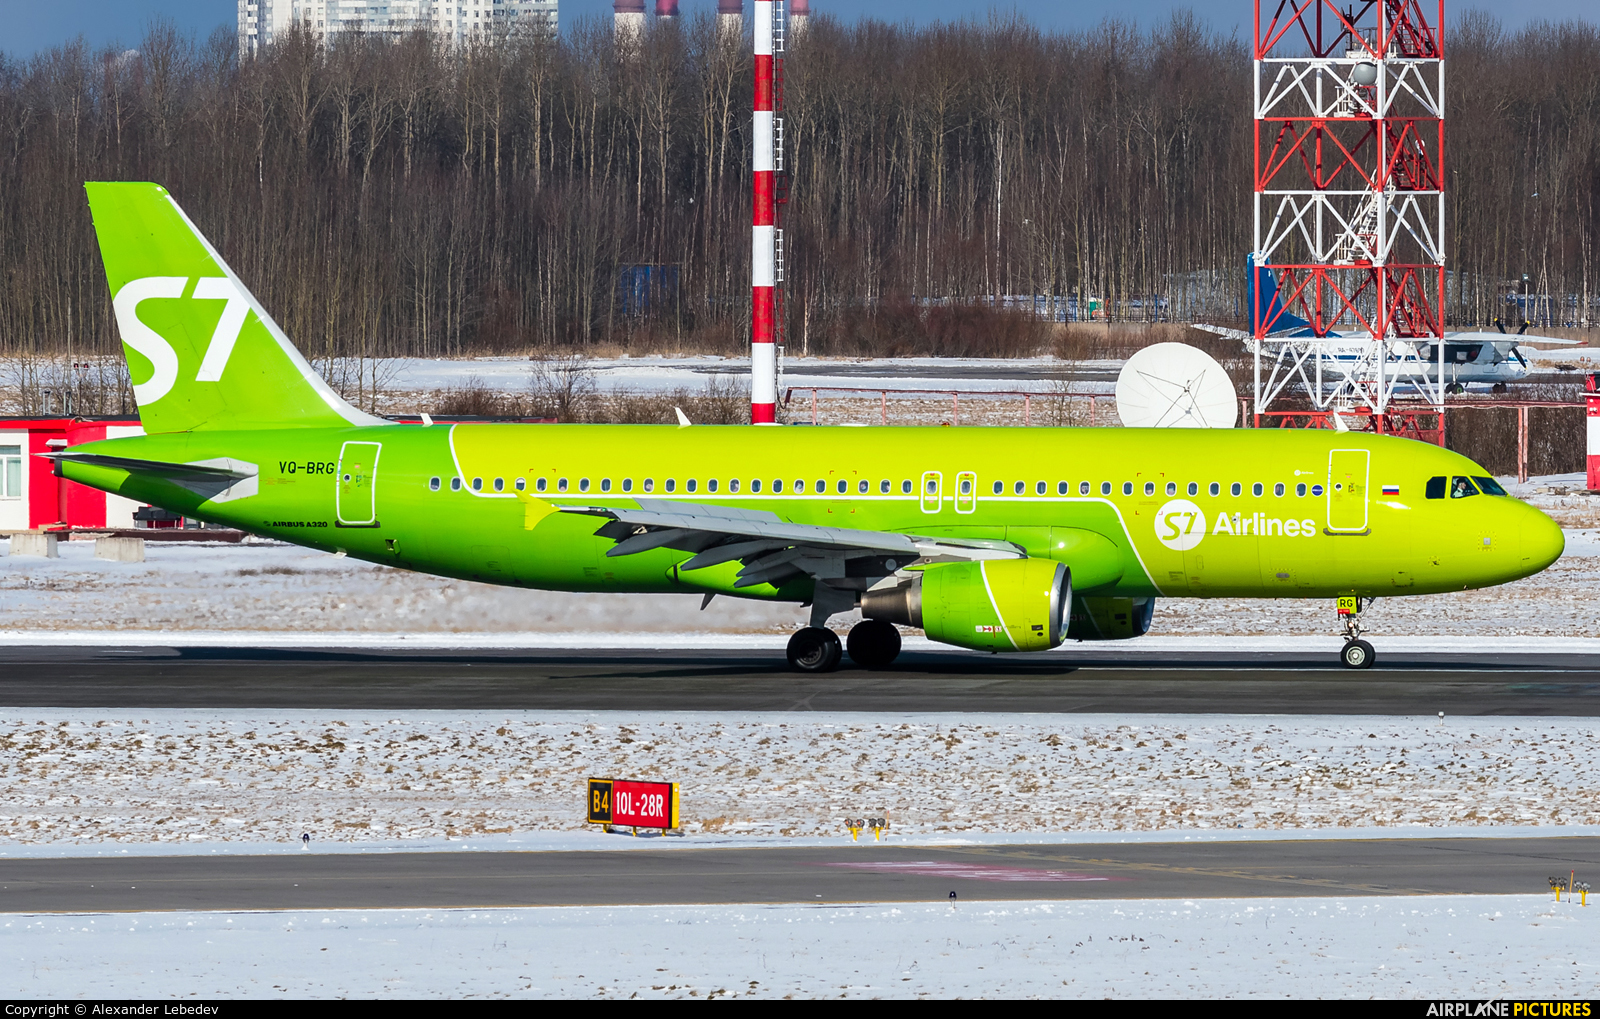 S7 Airlines VQ-BRG aircraft at St. Petersburg - Pulkovo